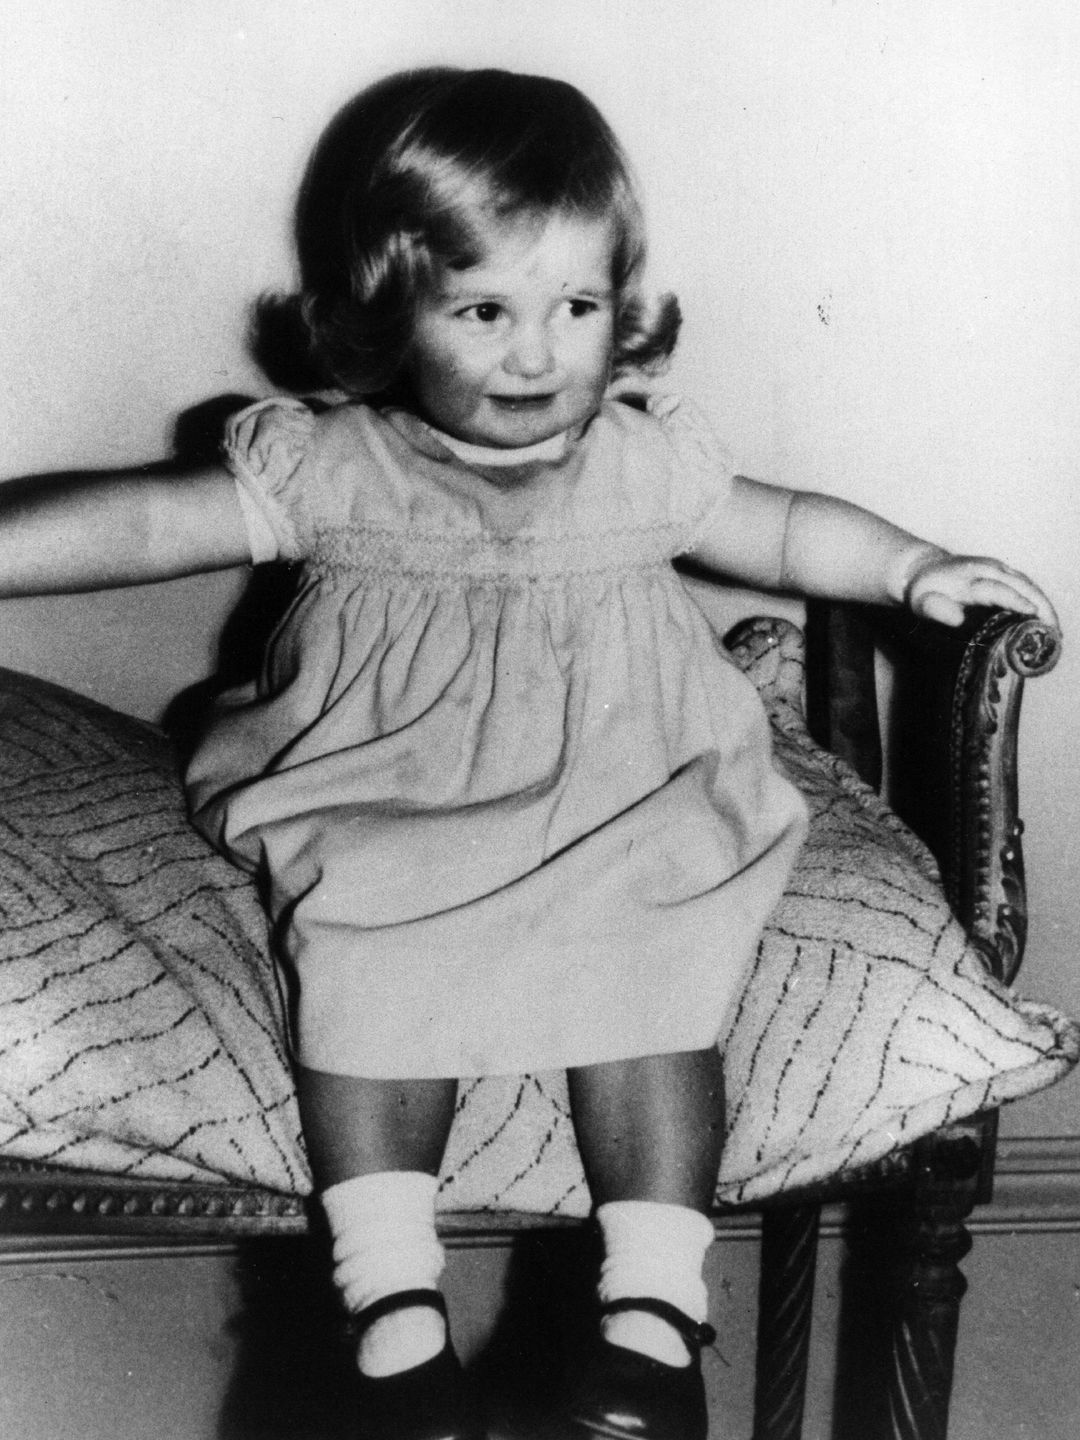 A young Princess Diana on a small sofa